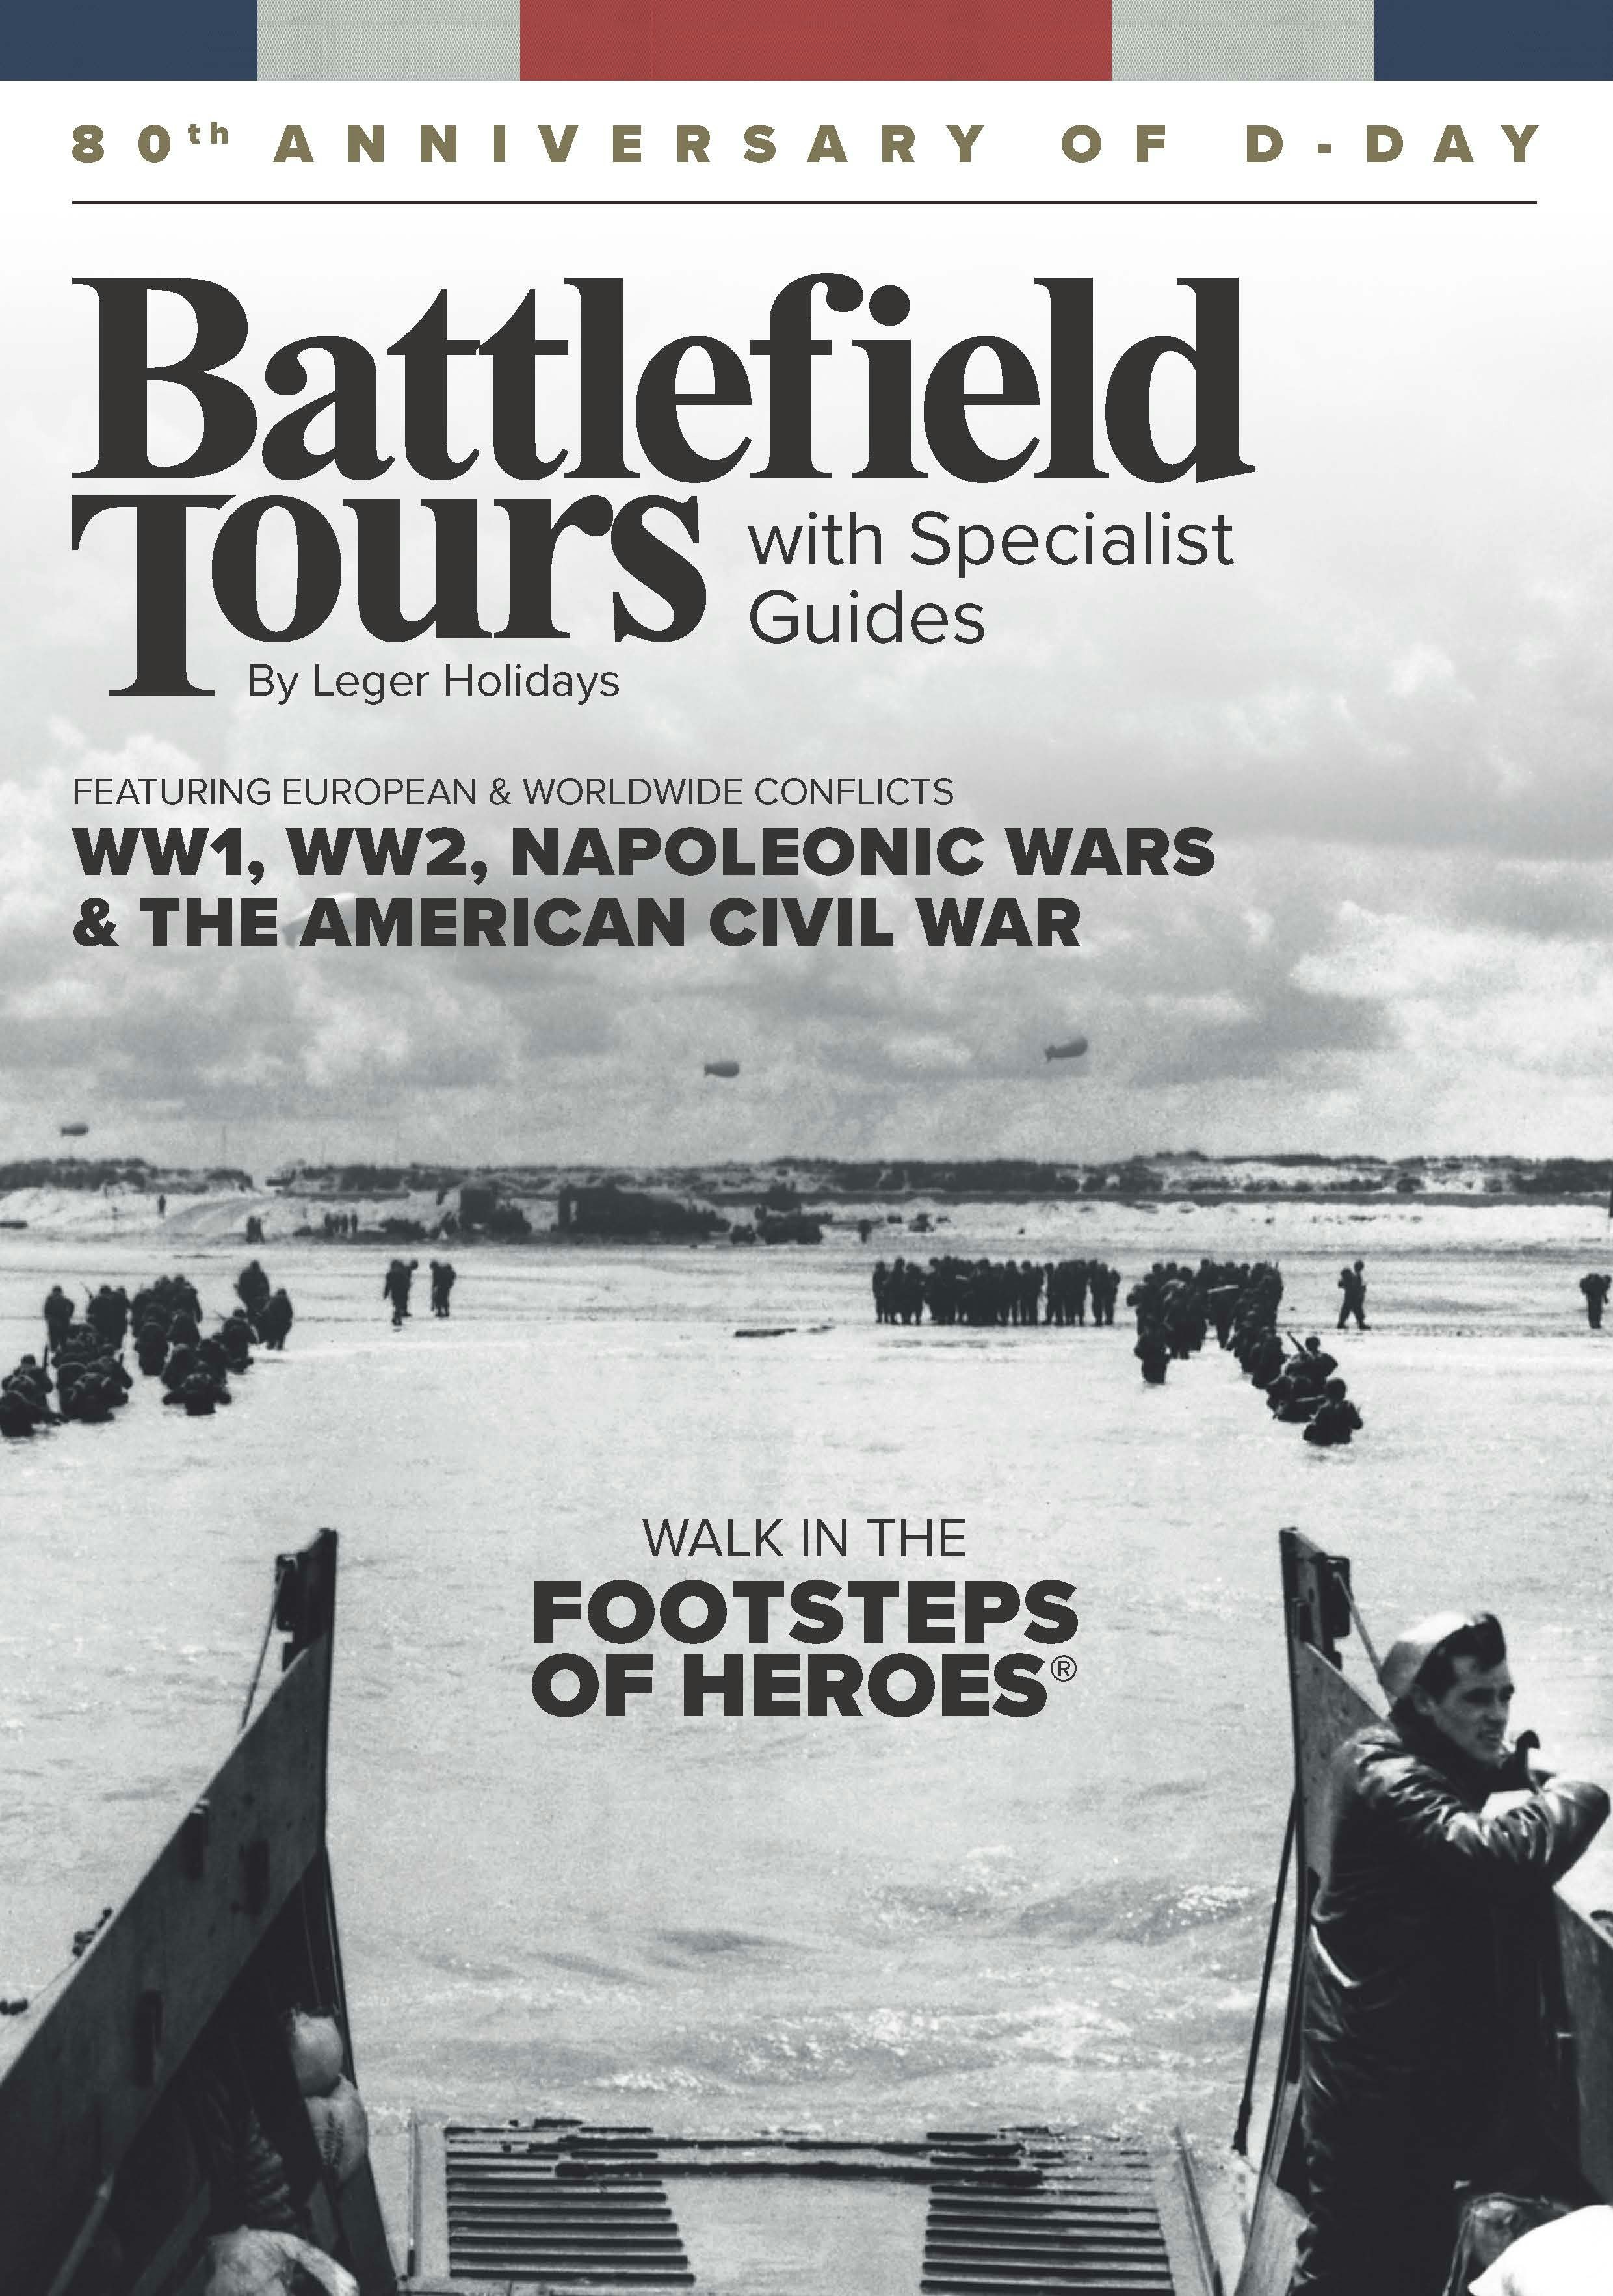 Battlefields brochure